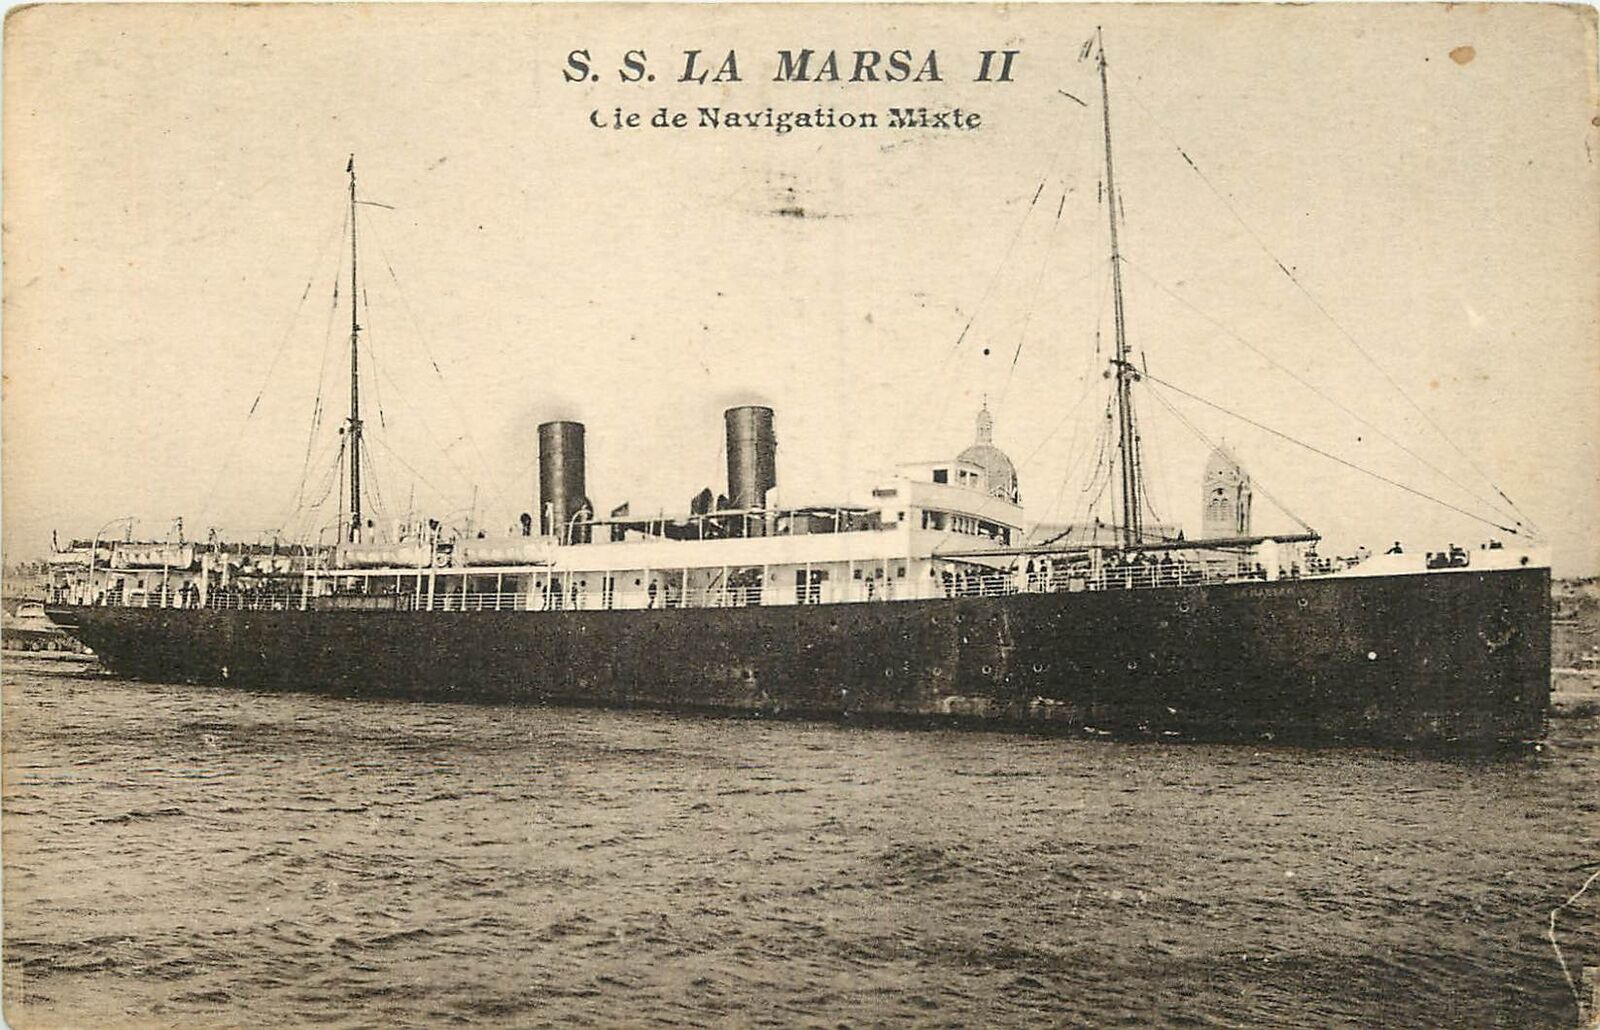 S.S. LA MARSA II CIE MIXED NAVIGATION